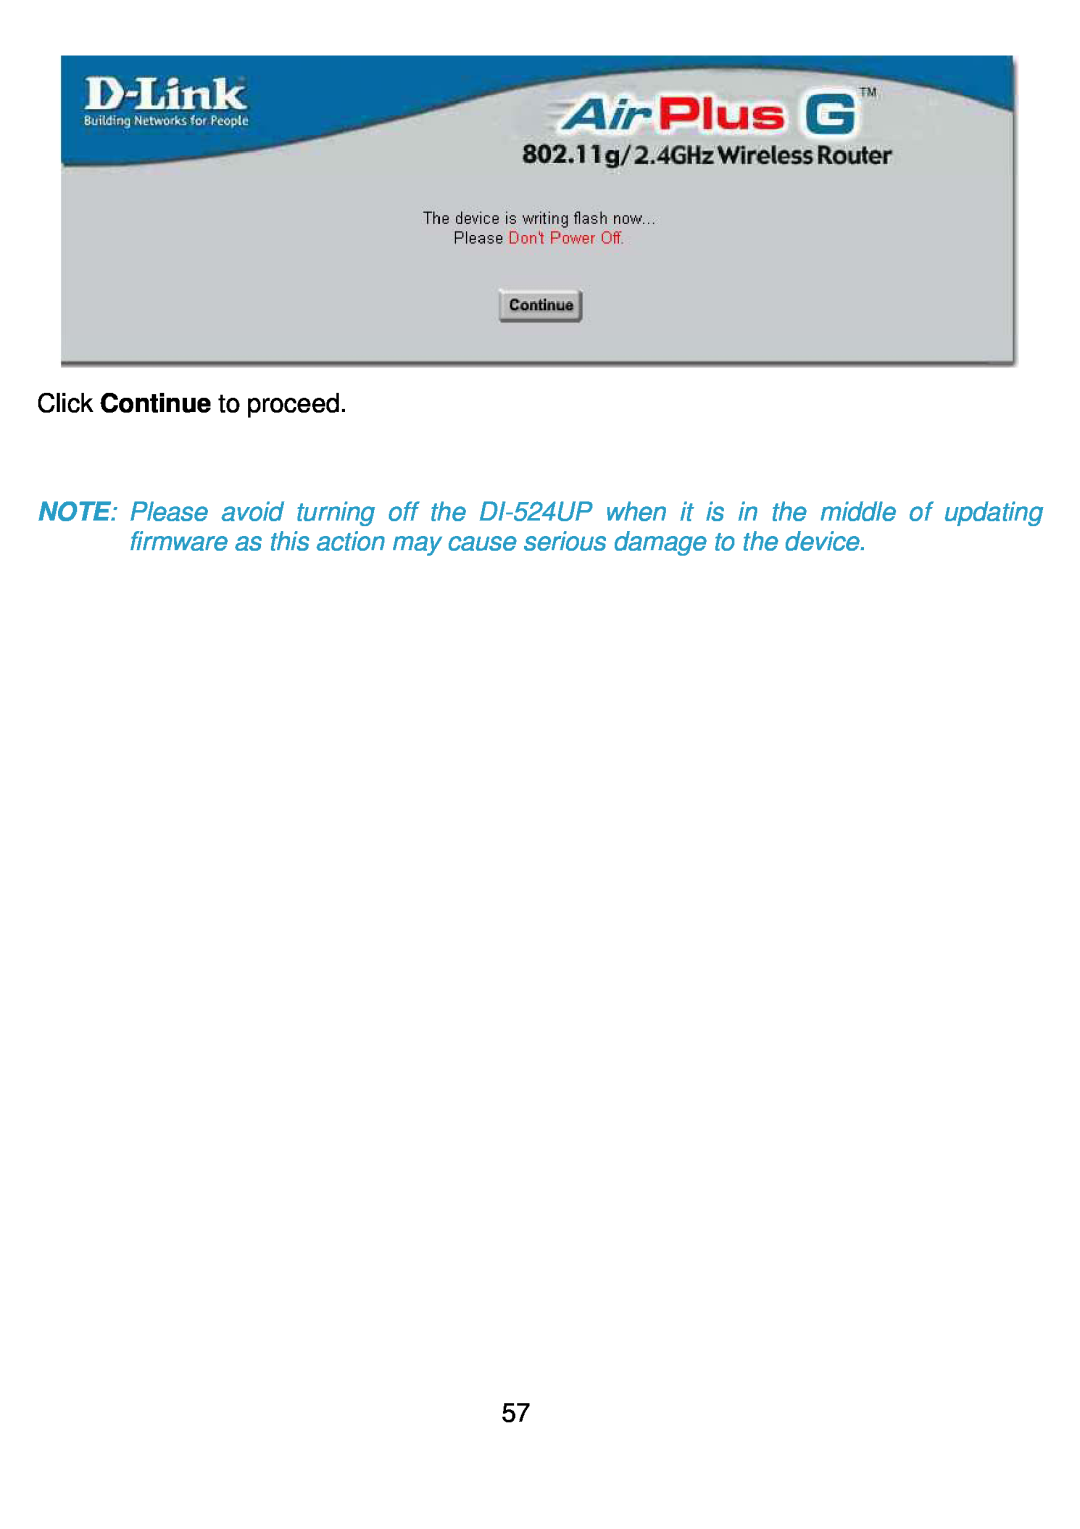 D-Link DI-524UP manual Click Continue to proceed 